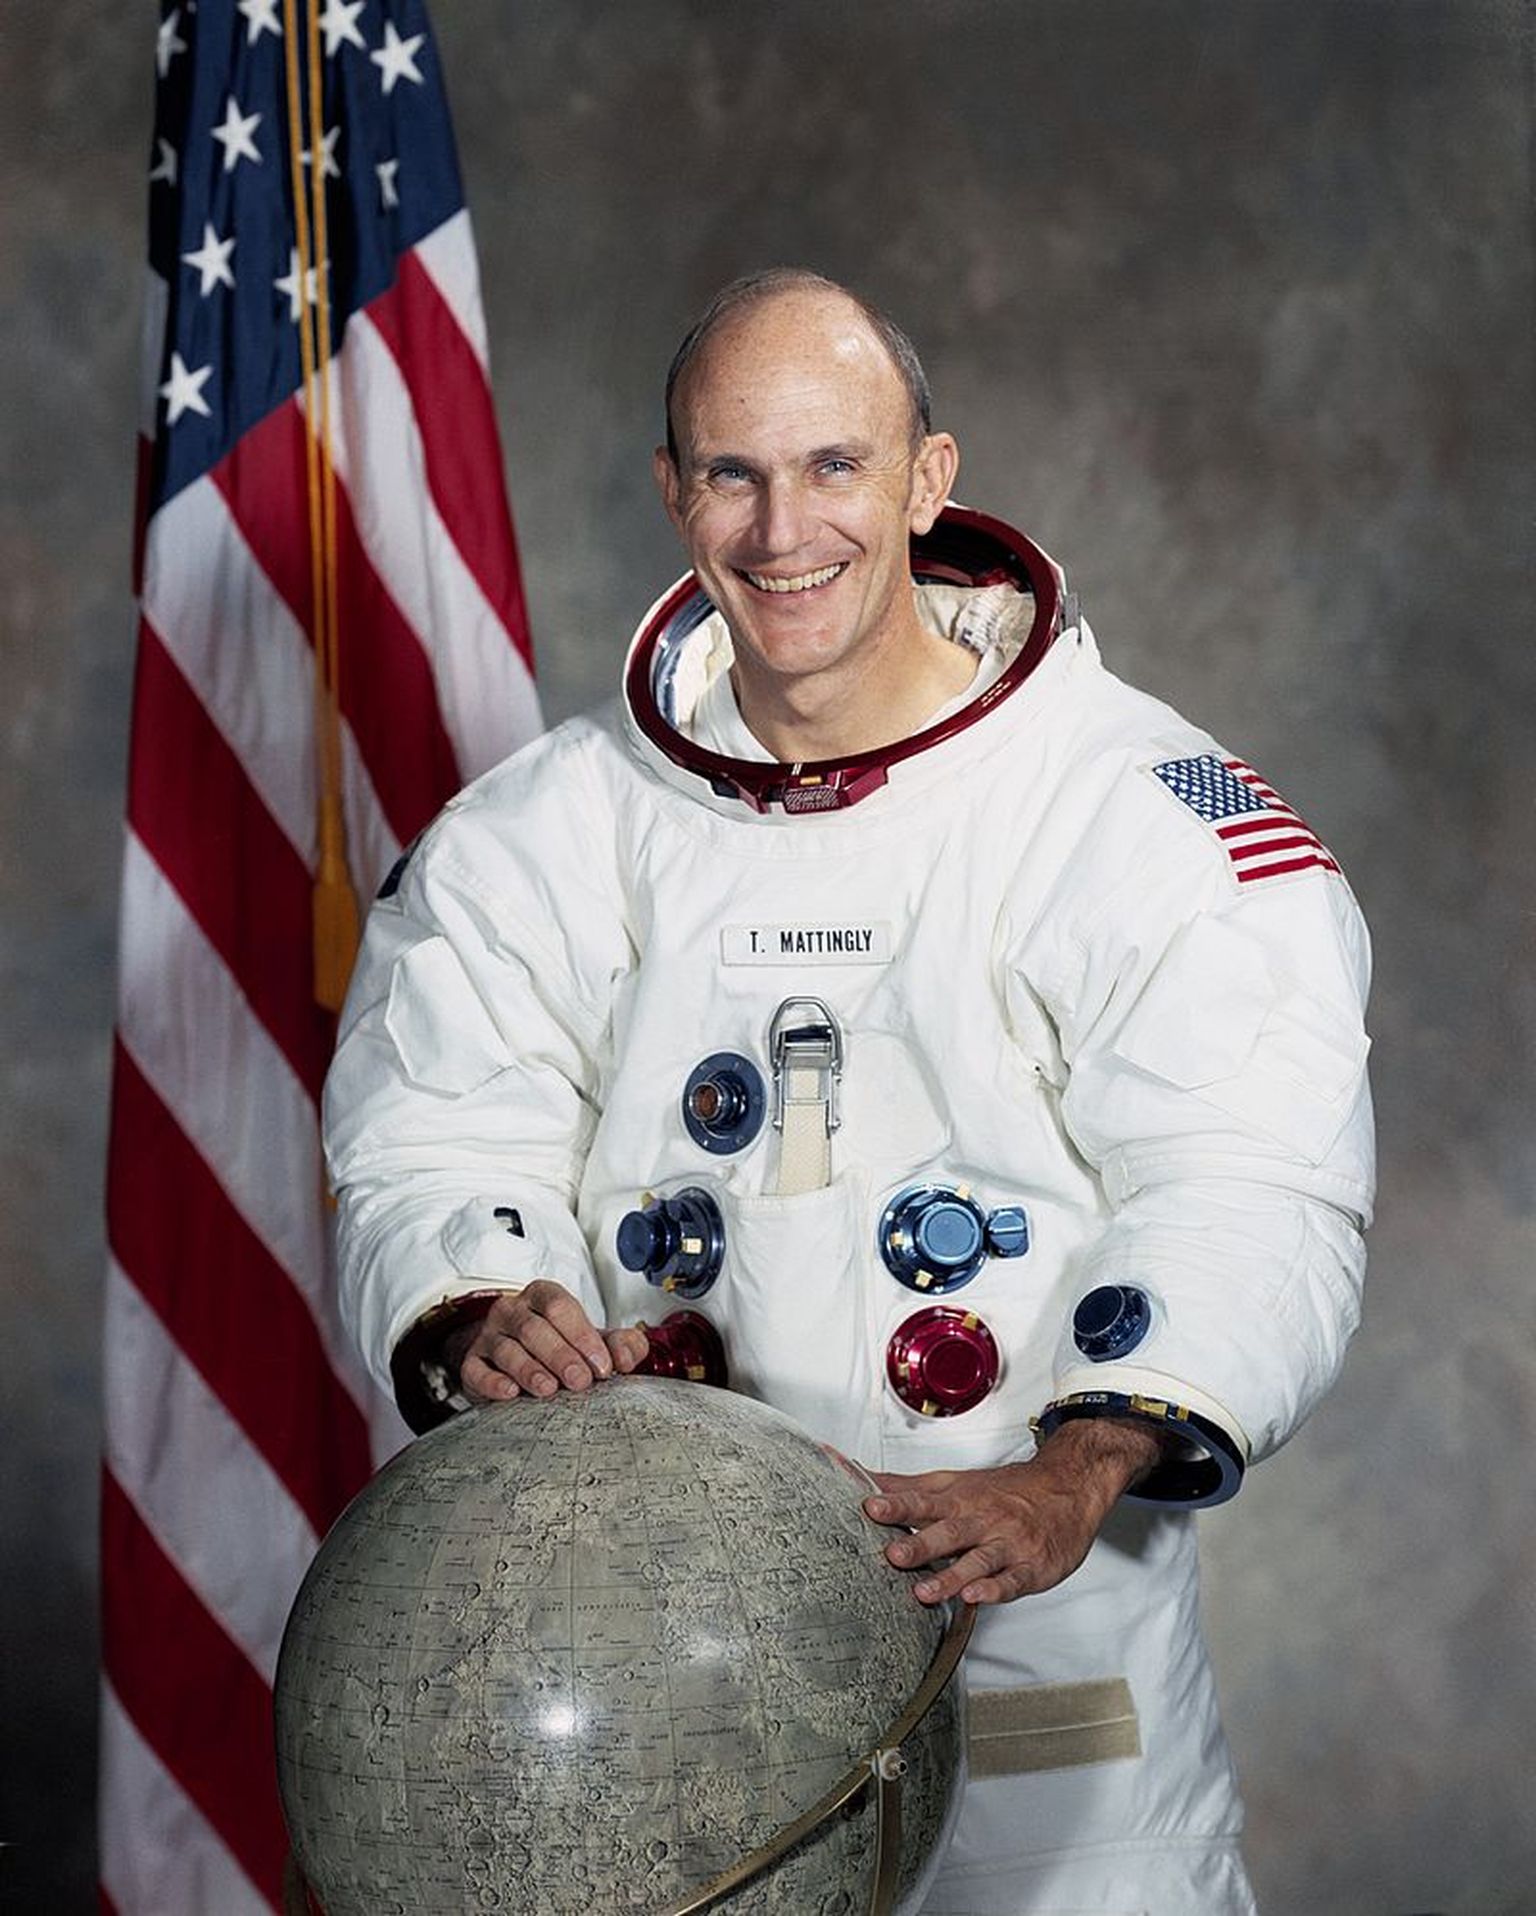 "Apollo 16" astronauts Kens Metinglijs